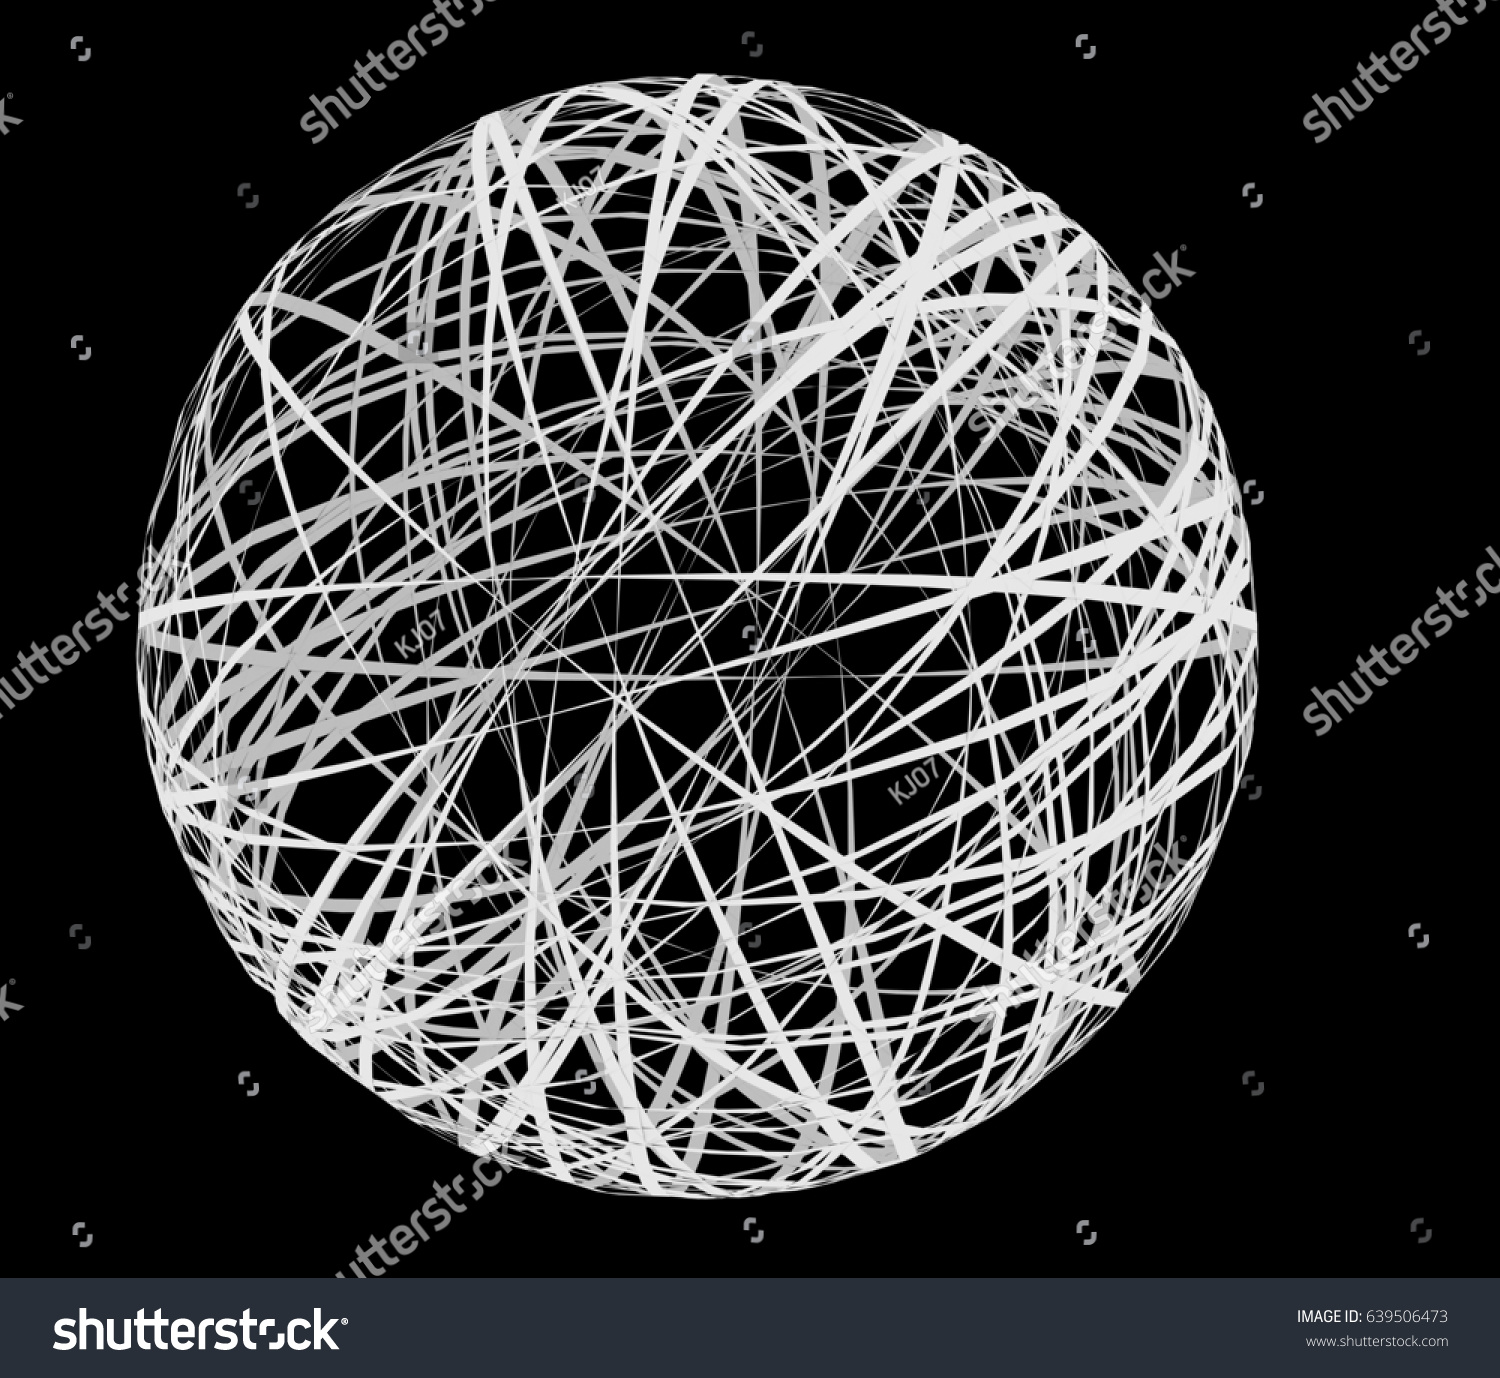 3d Rendering Abstract Ball Stock Illustration 639506473 - Shutterstock